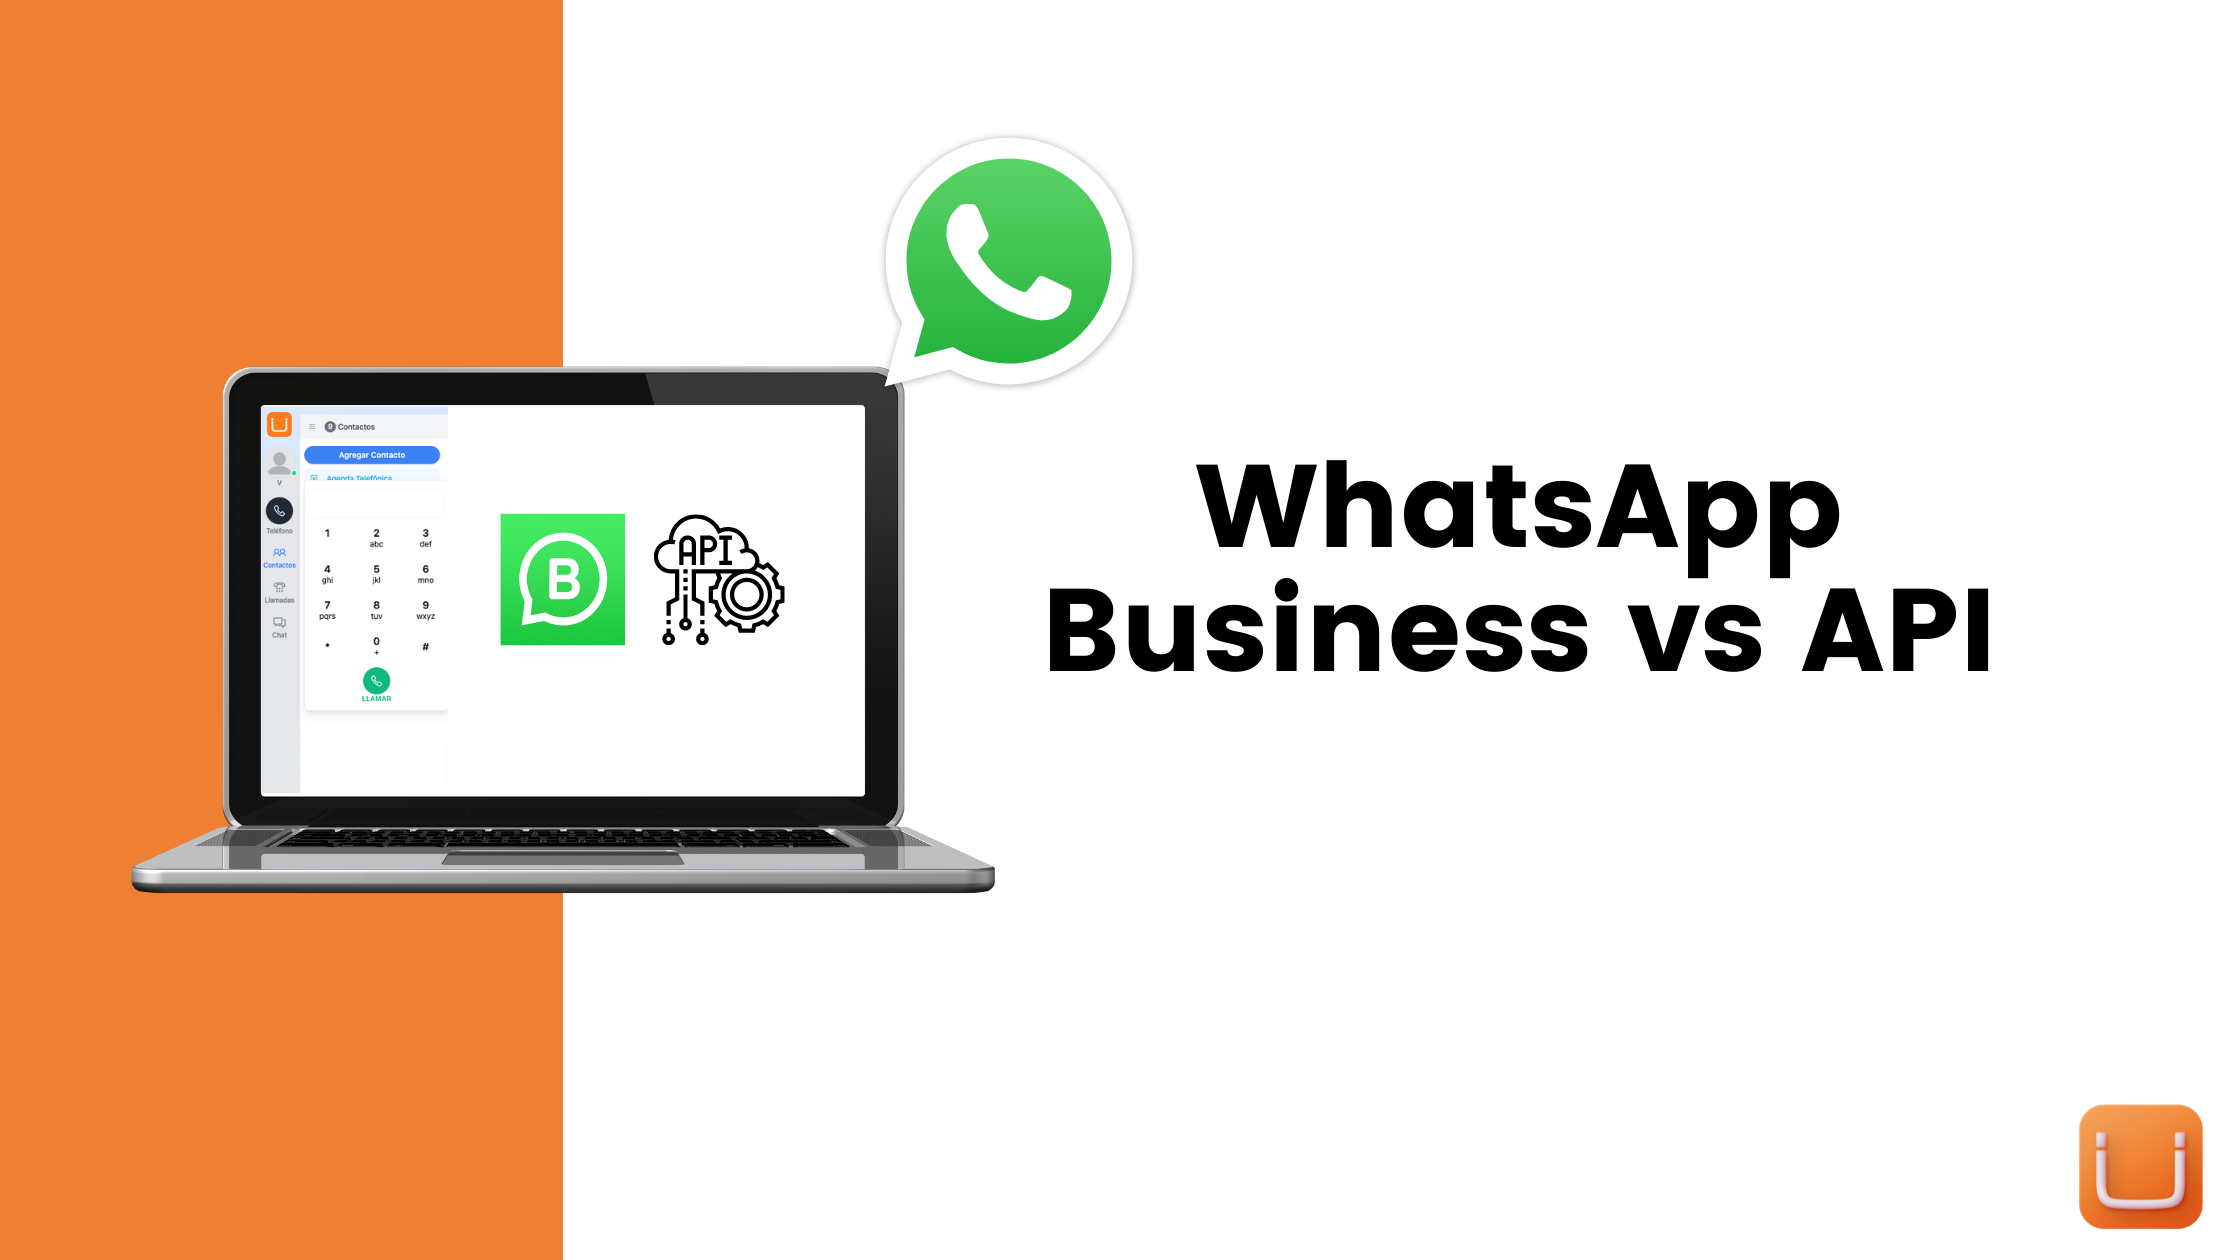 WhatsApp business vs WhatsApp API